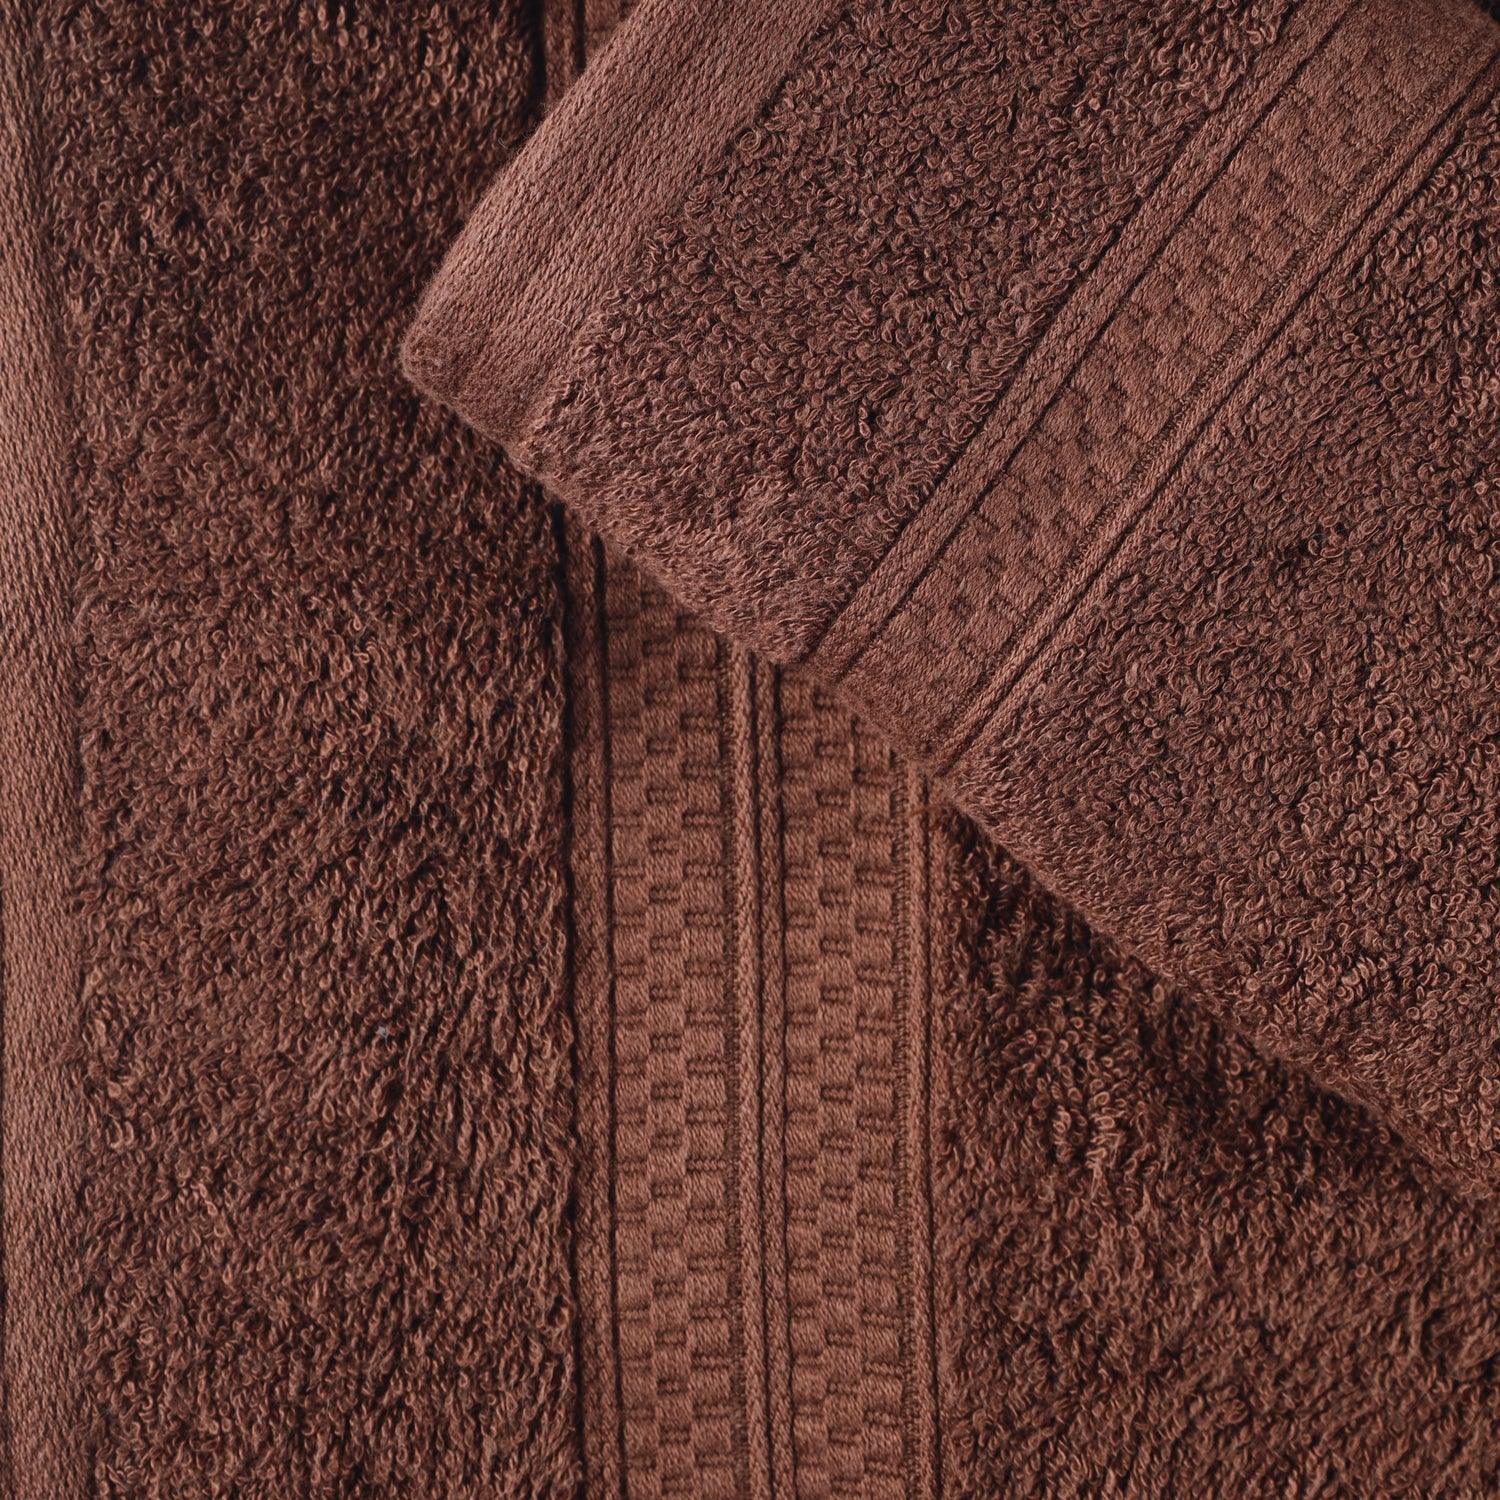 Rayon from Bamboo Ultra-Plush Heavyweight 2-Piece Bath Towel Set -  Chocolate